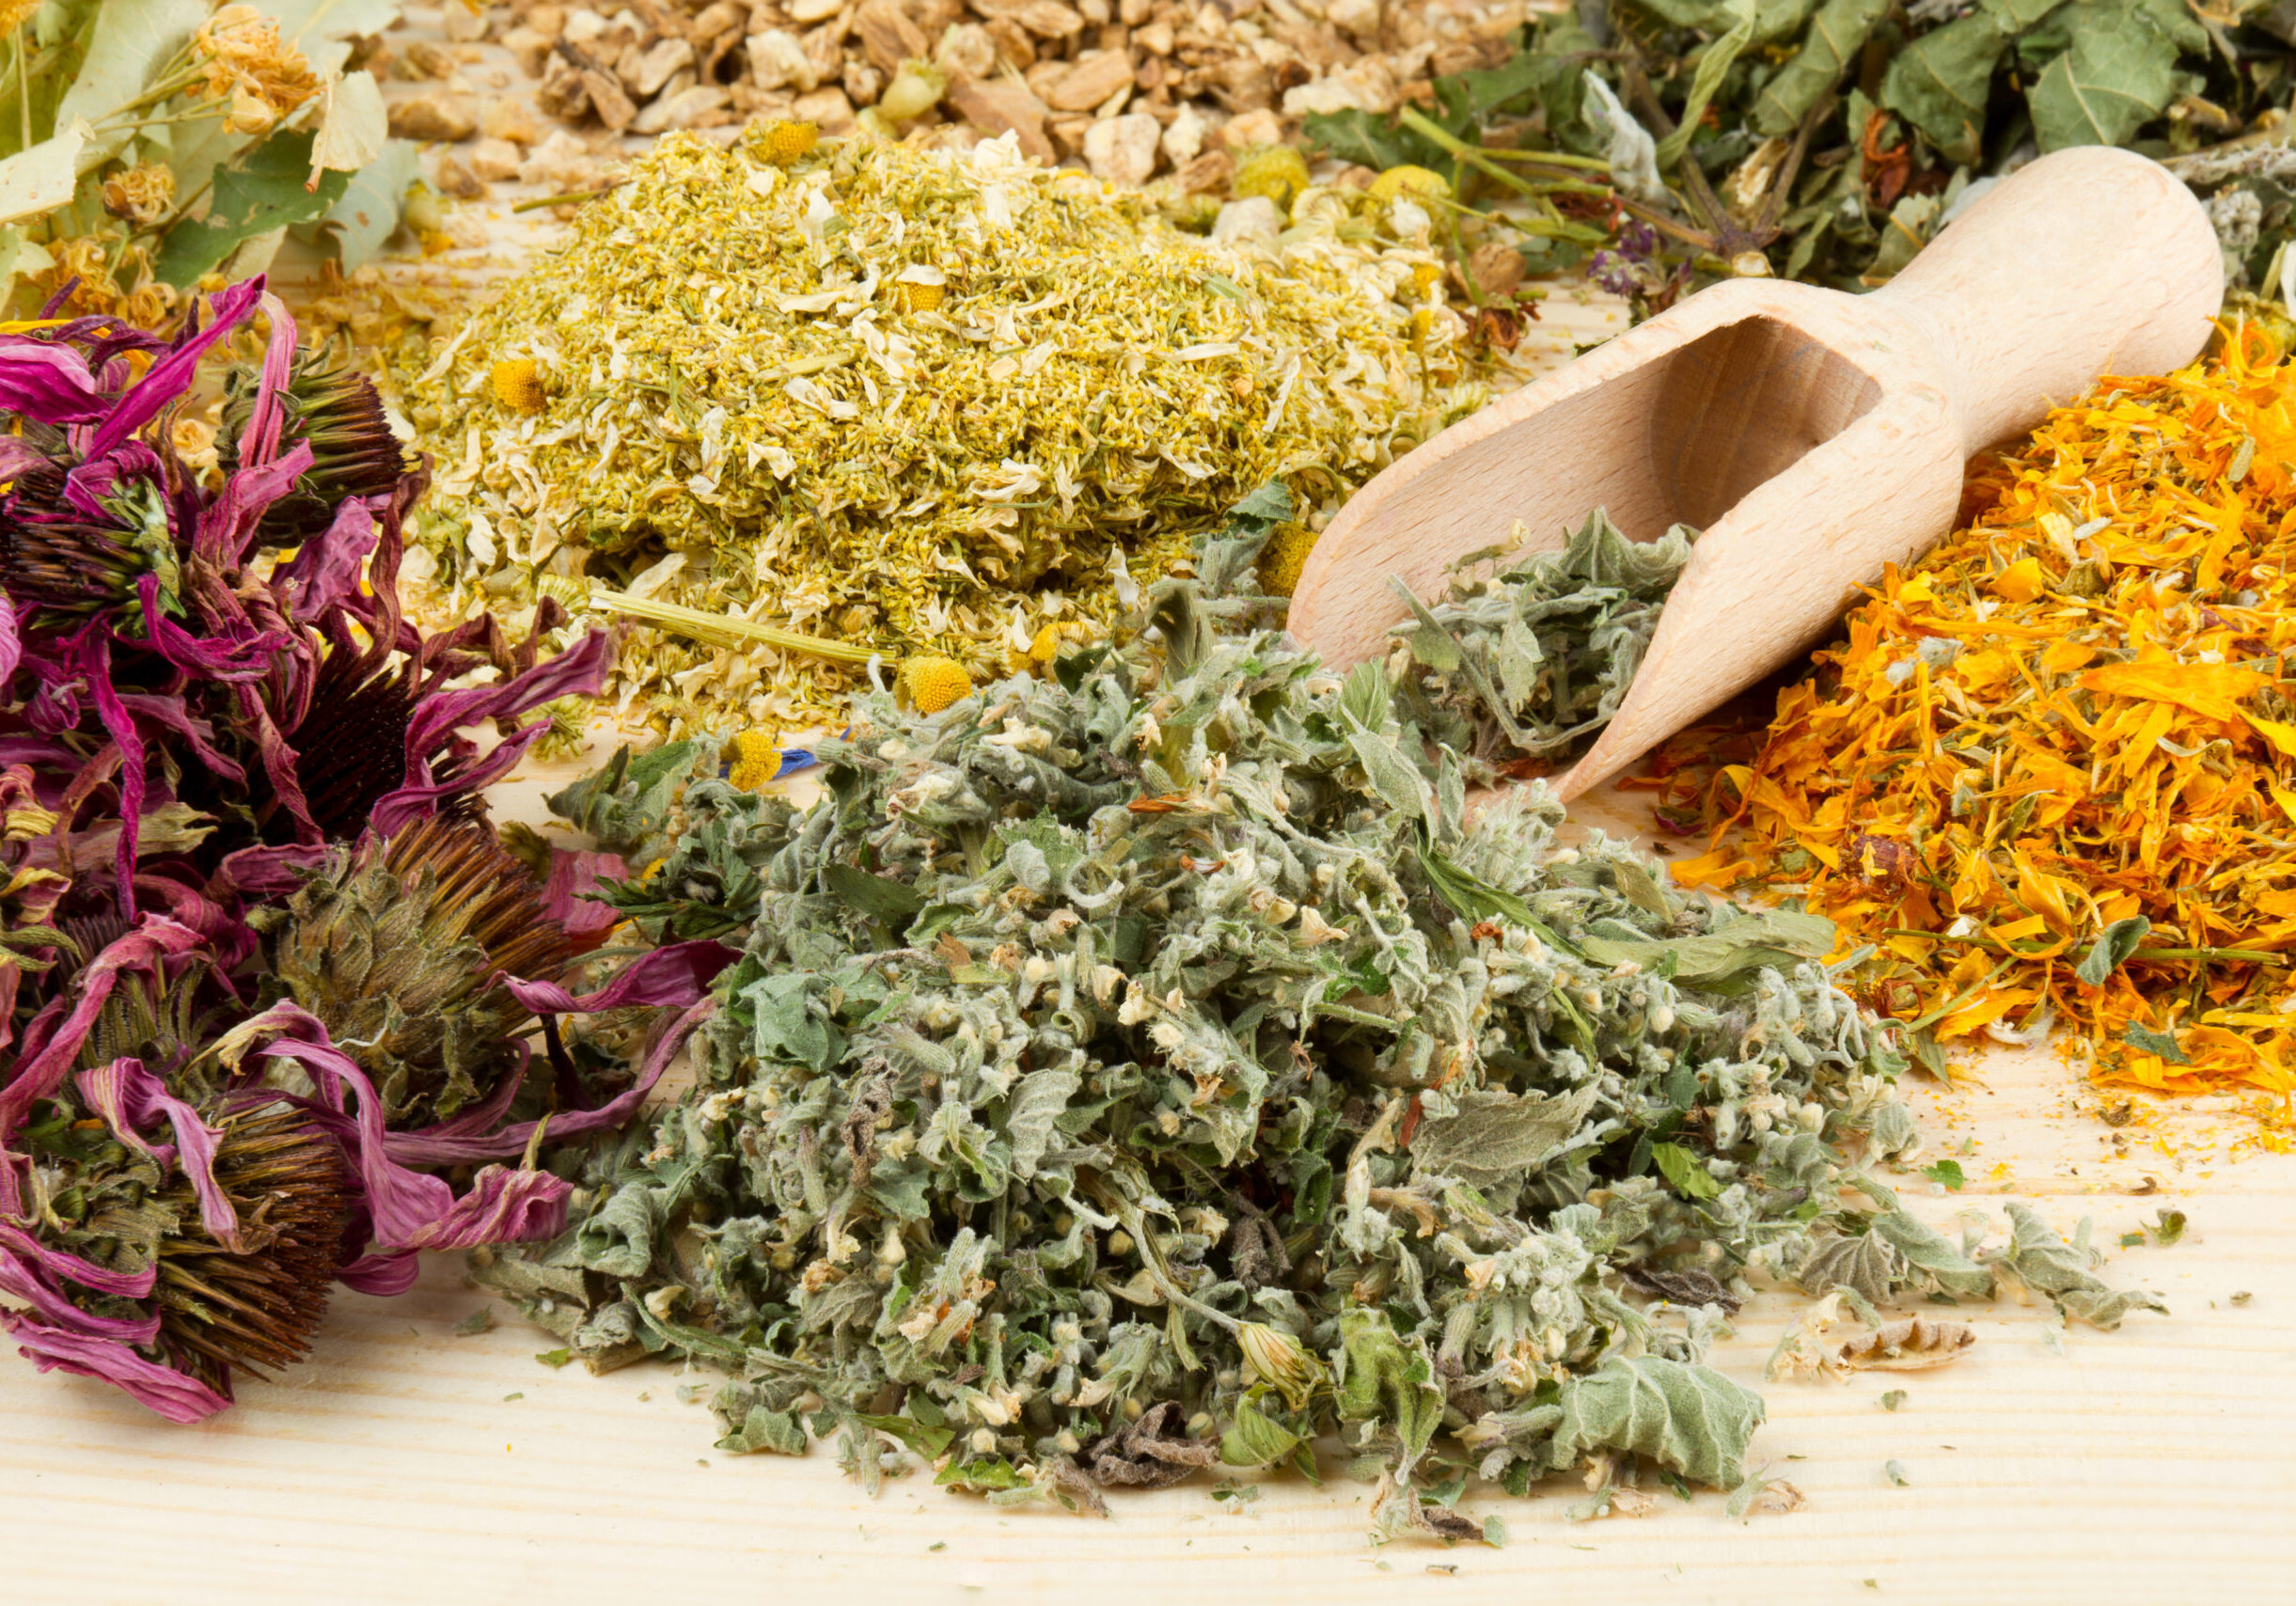 healing herbs with scoop on wooden table, herbal medicine